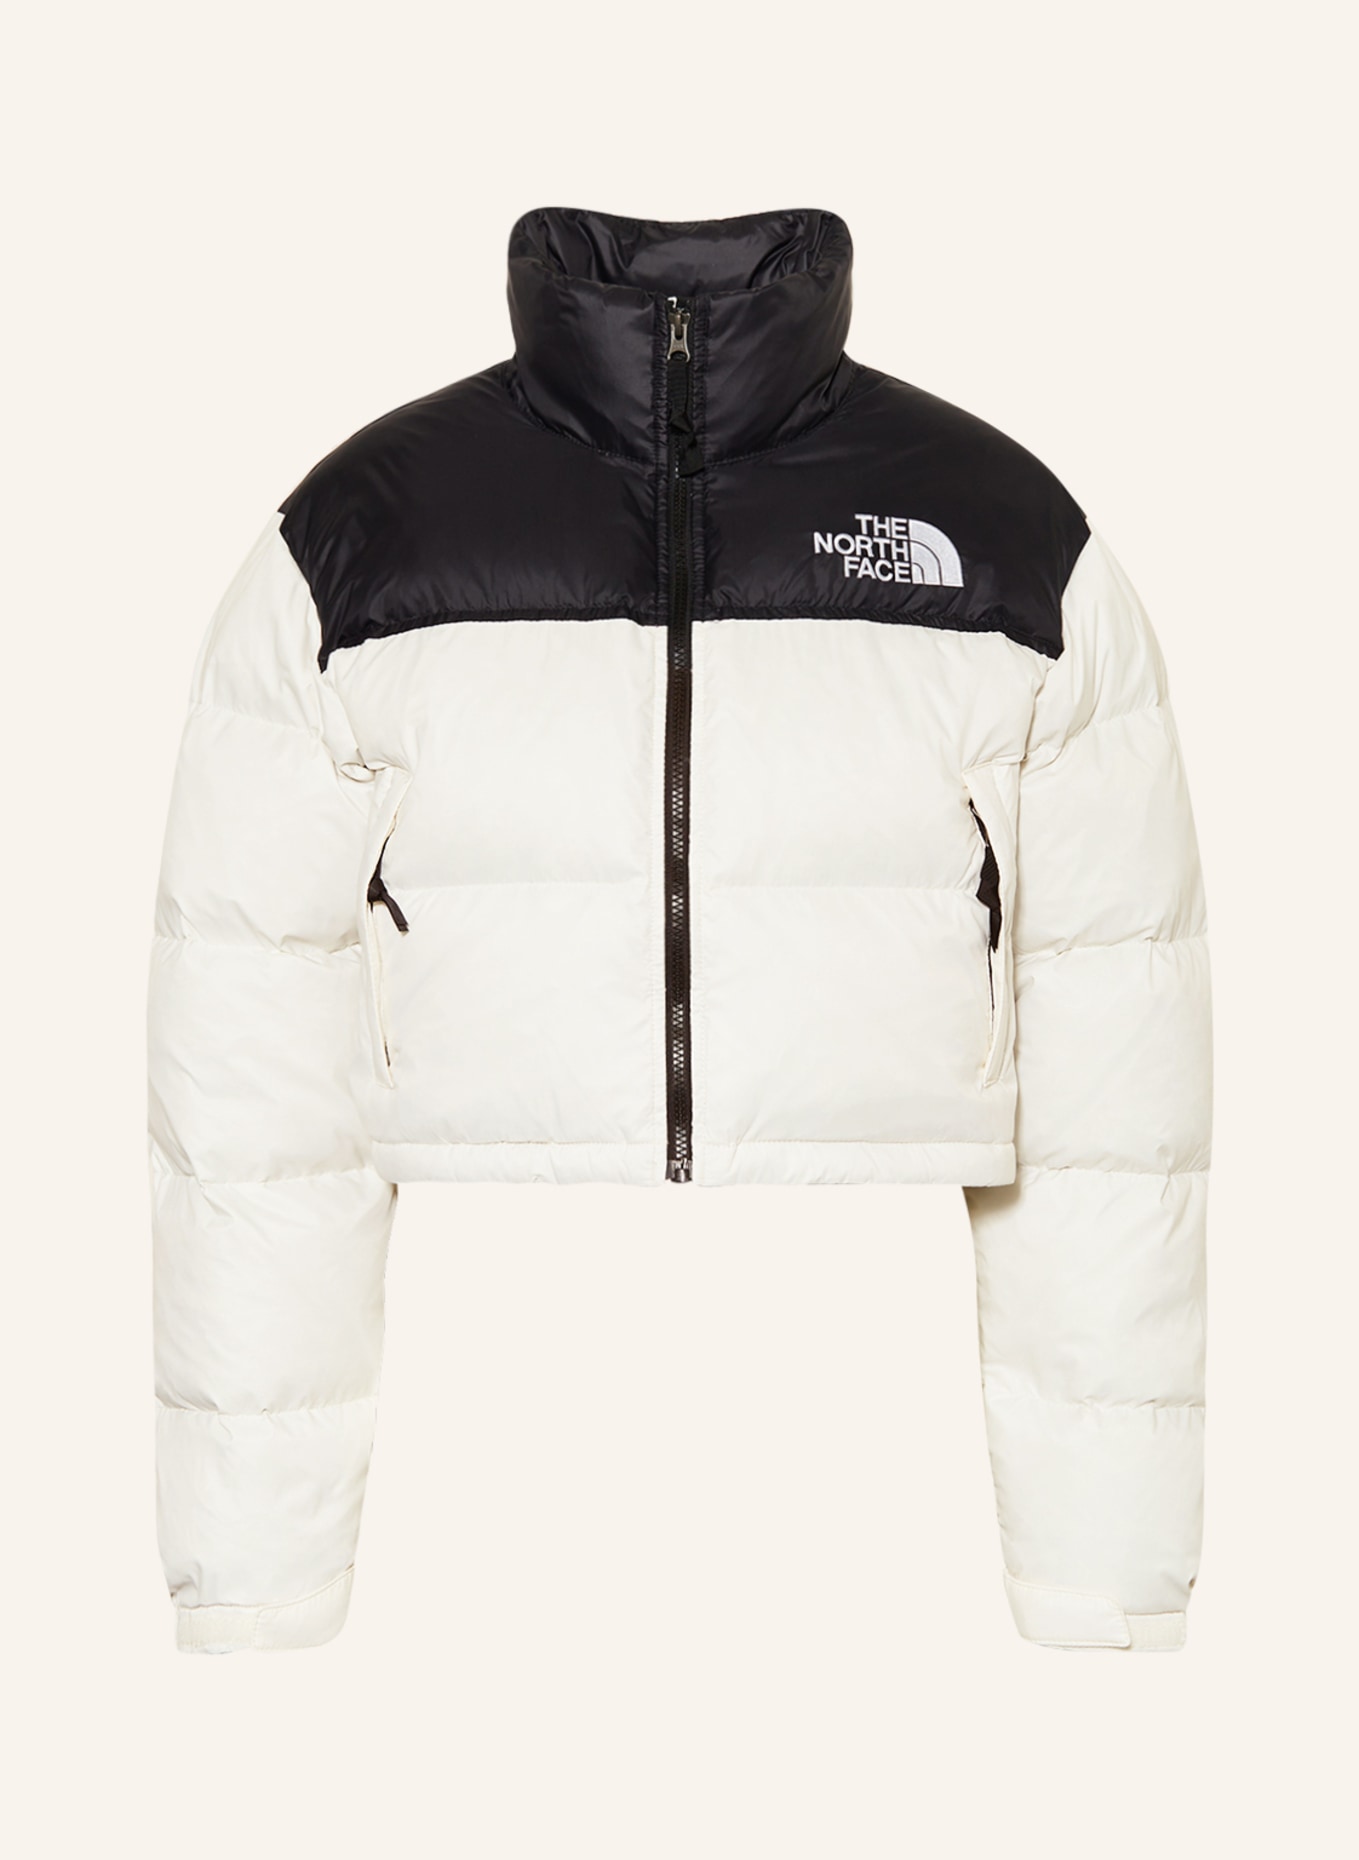 The North Face Alta Vista Jacket - Men's - Clothing